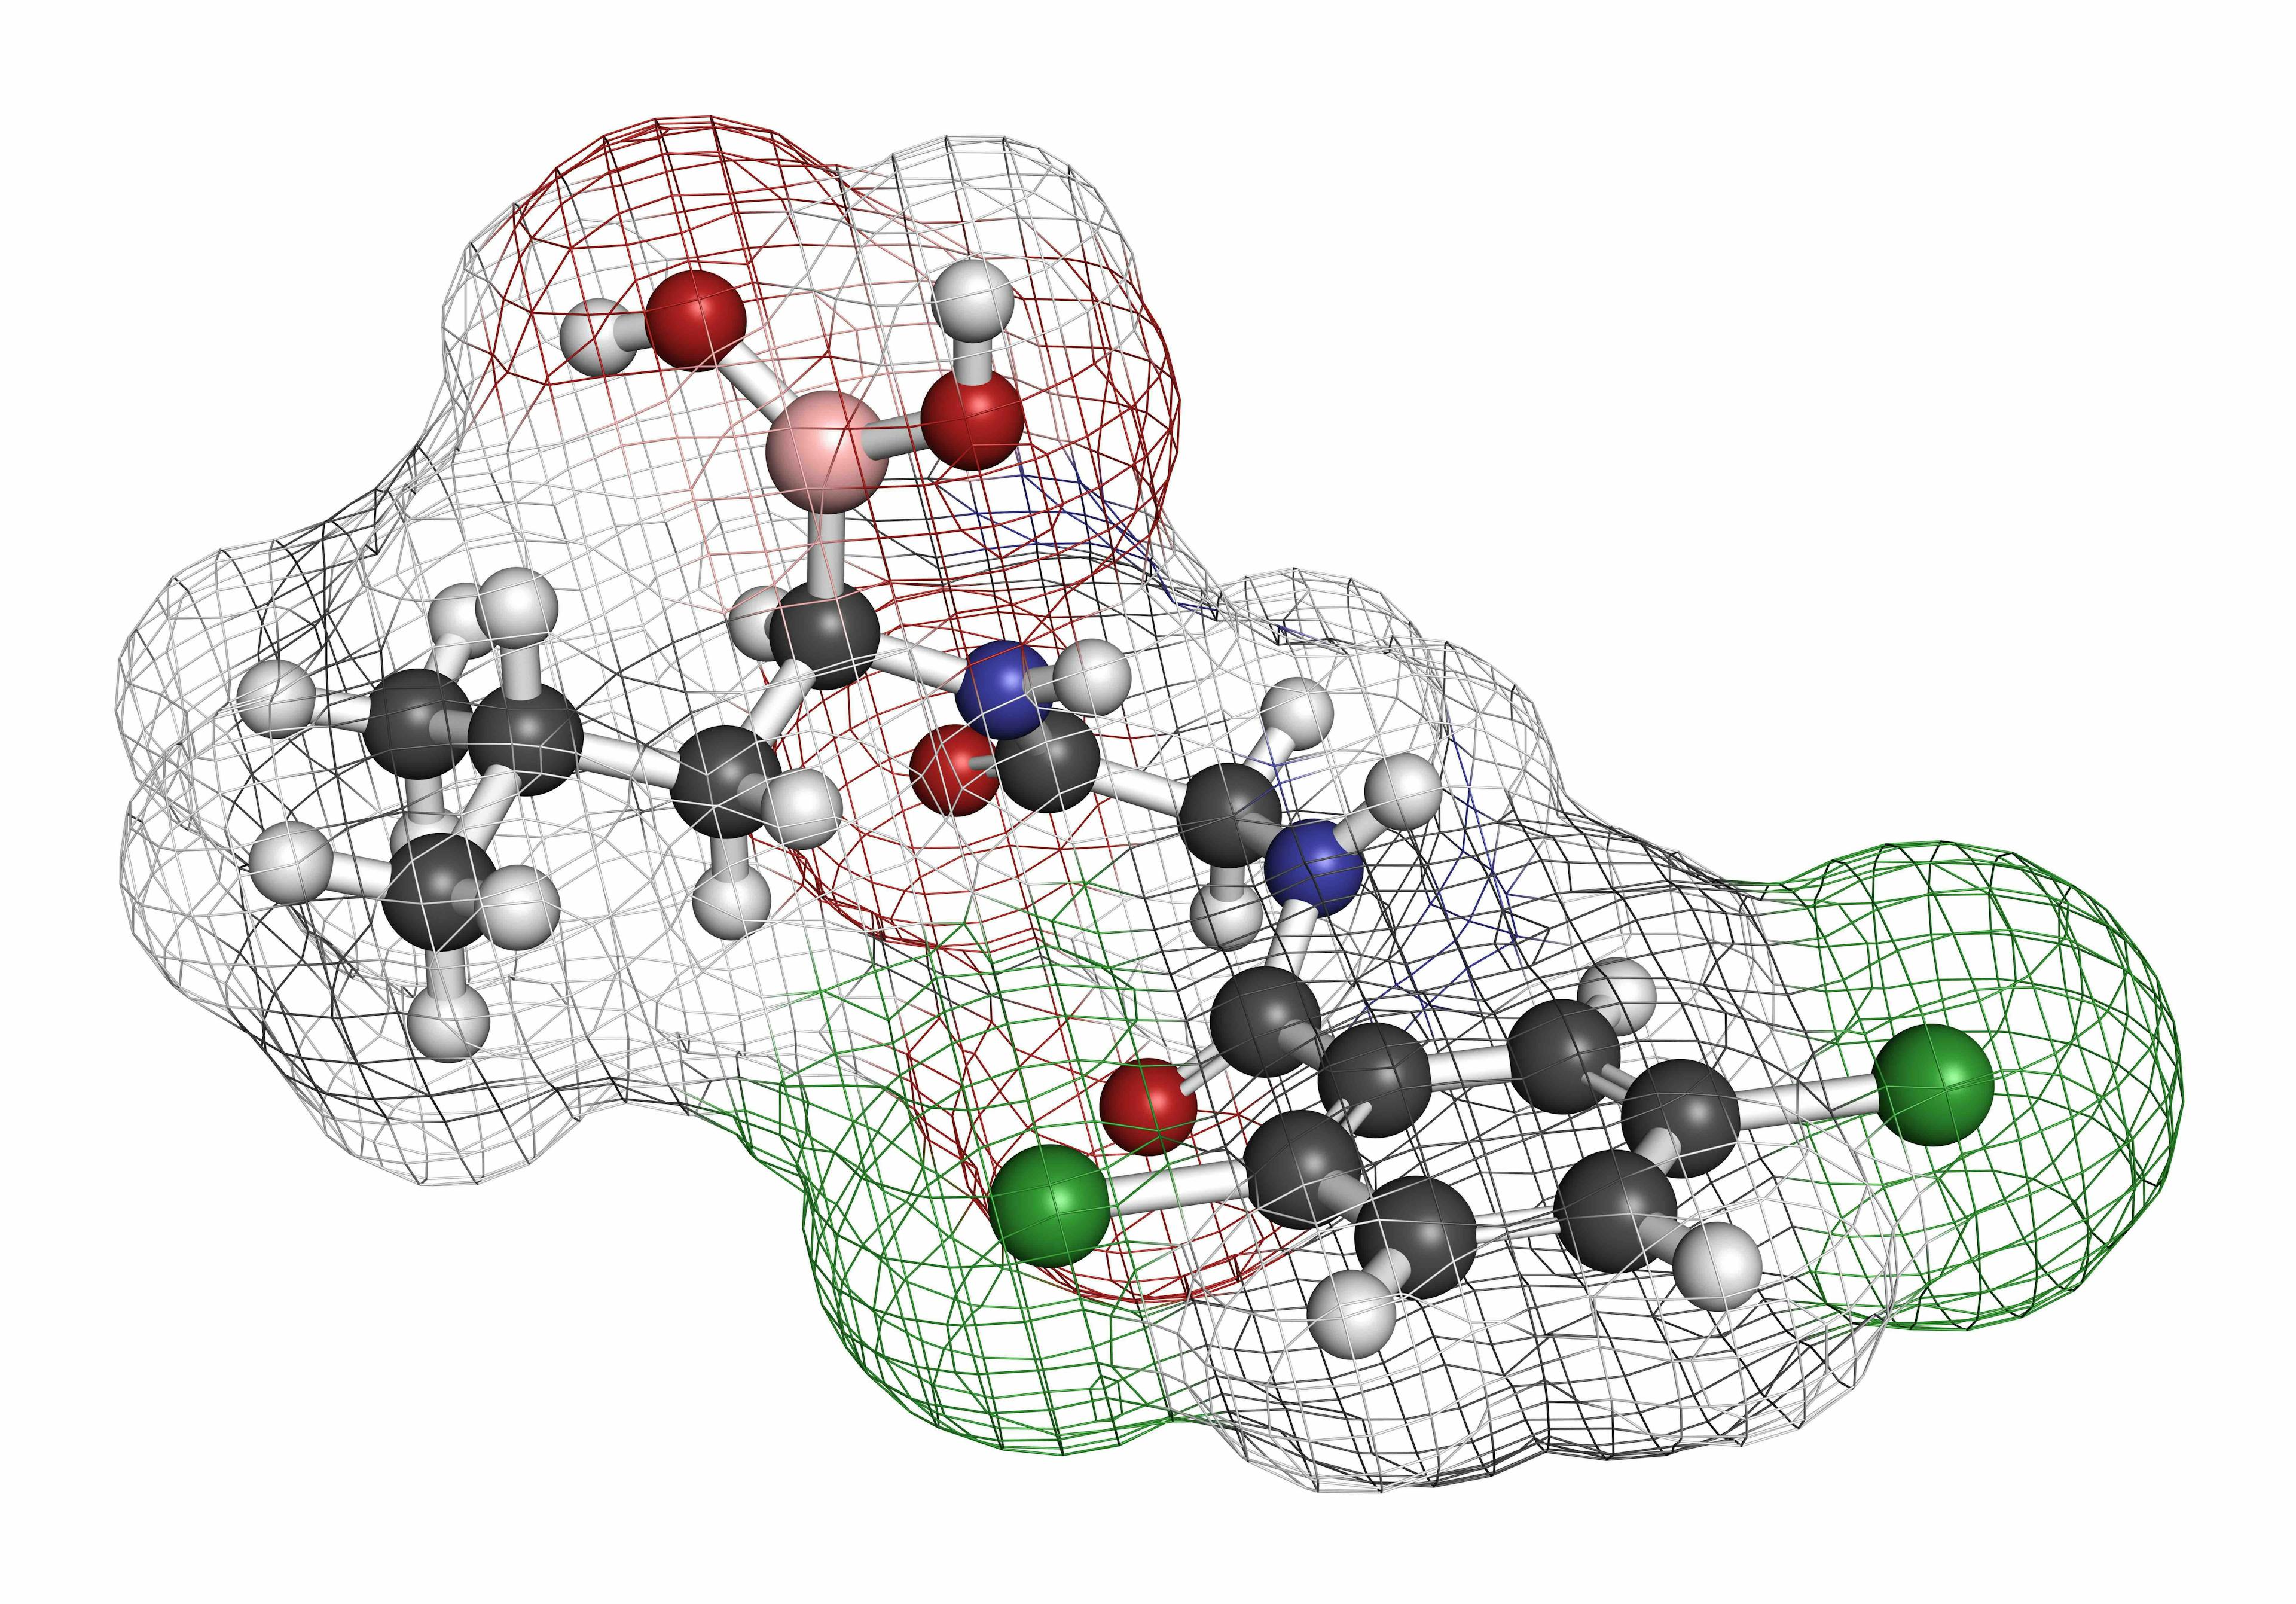 Ixazomib molecule | Image credit: molekuul.be - stock.adobe.com